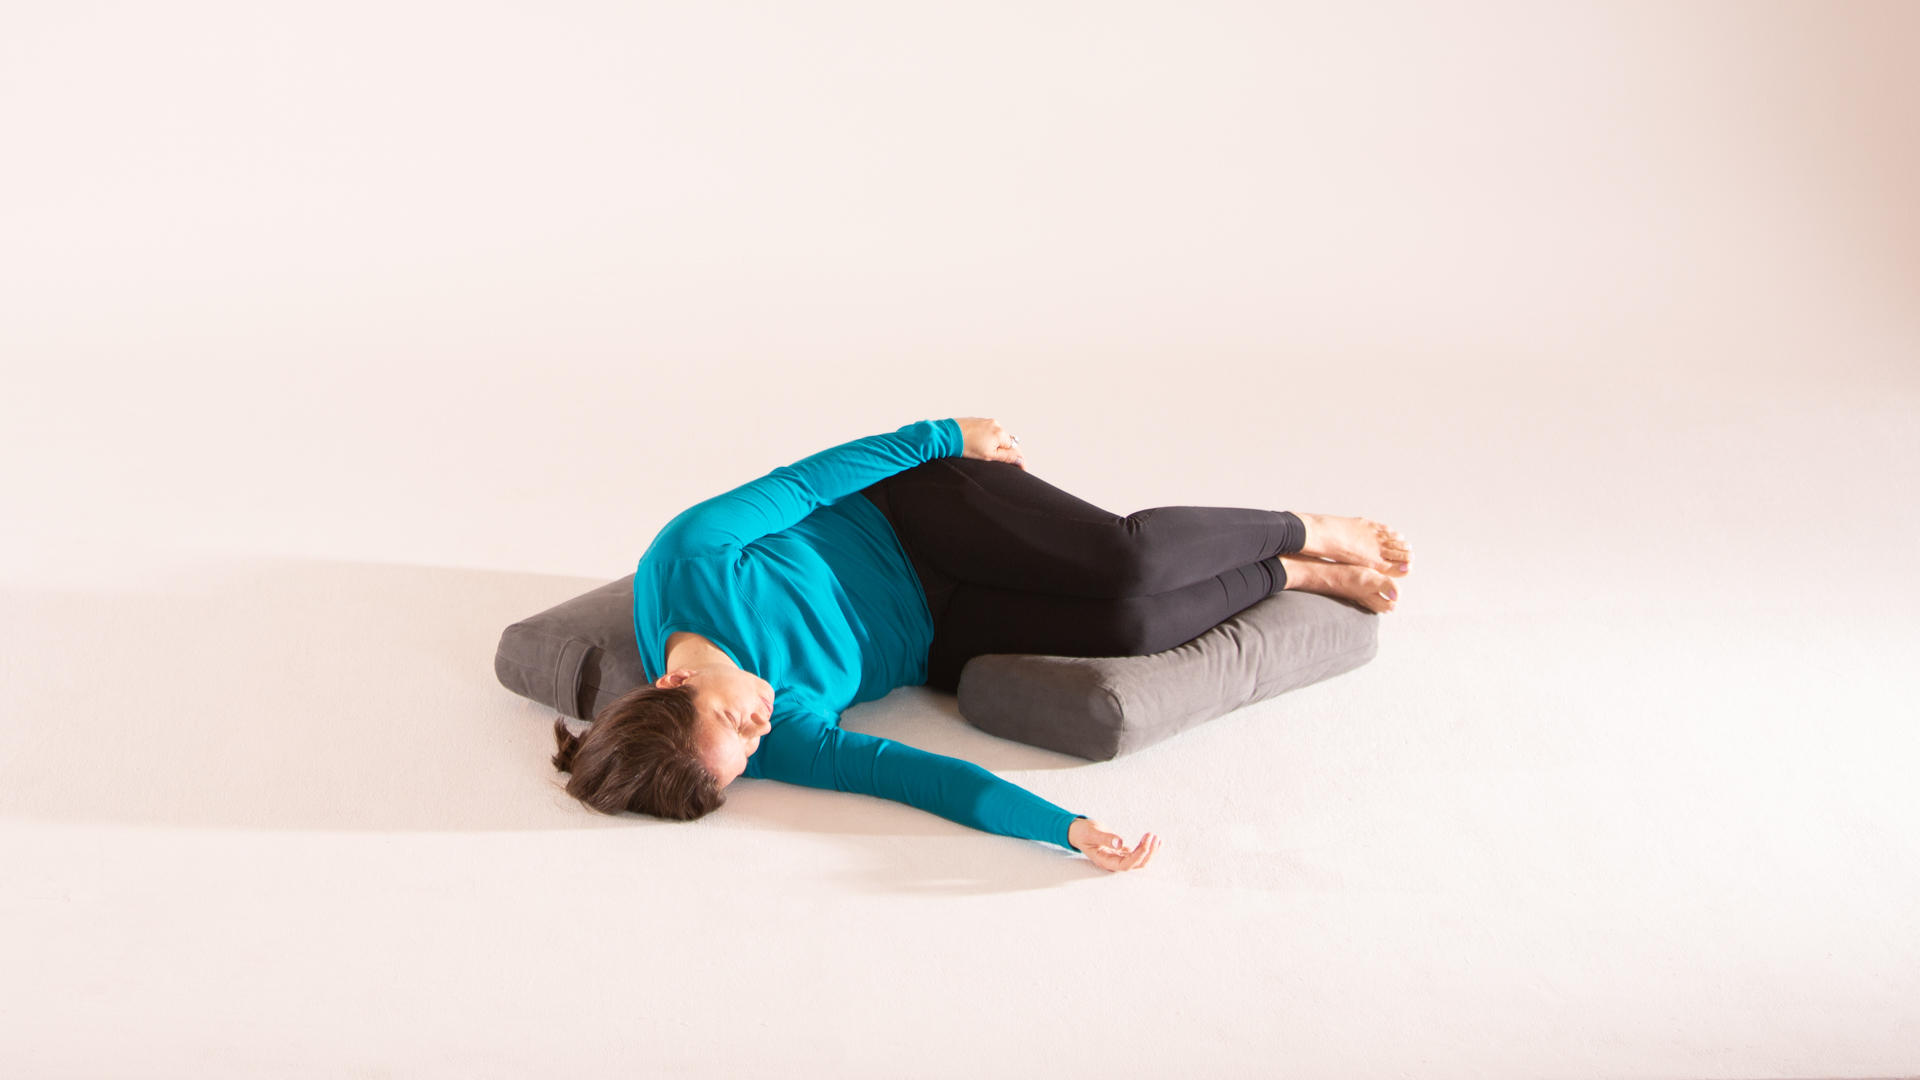 Yoga Pose Of The Week: Half Spinal Twist | Yoga for knees, Yoga poses, Easy  yoga